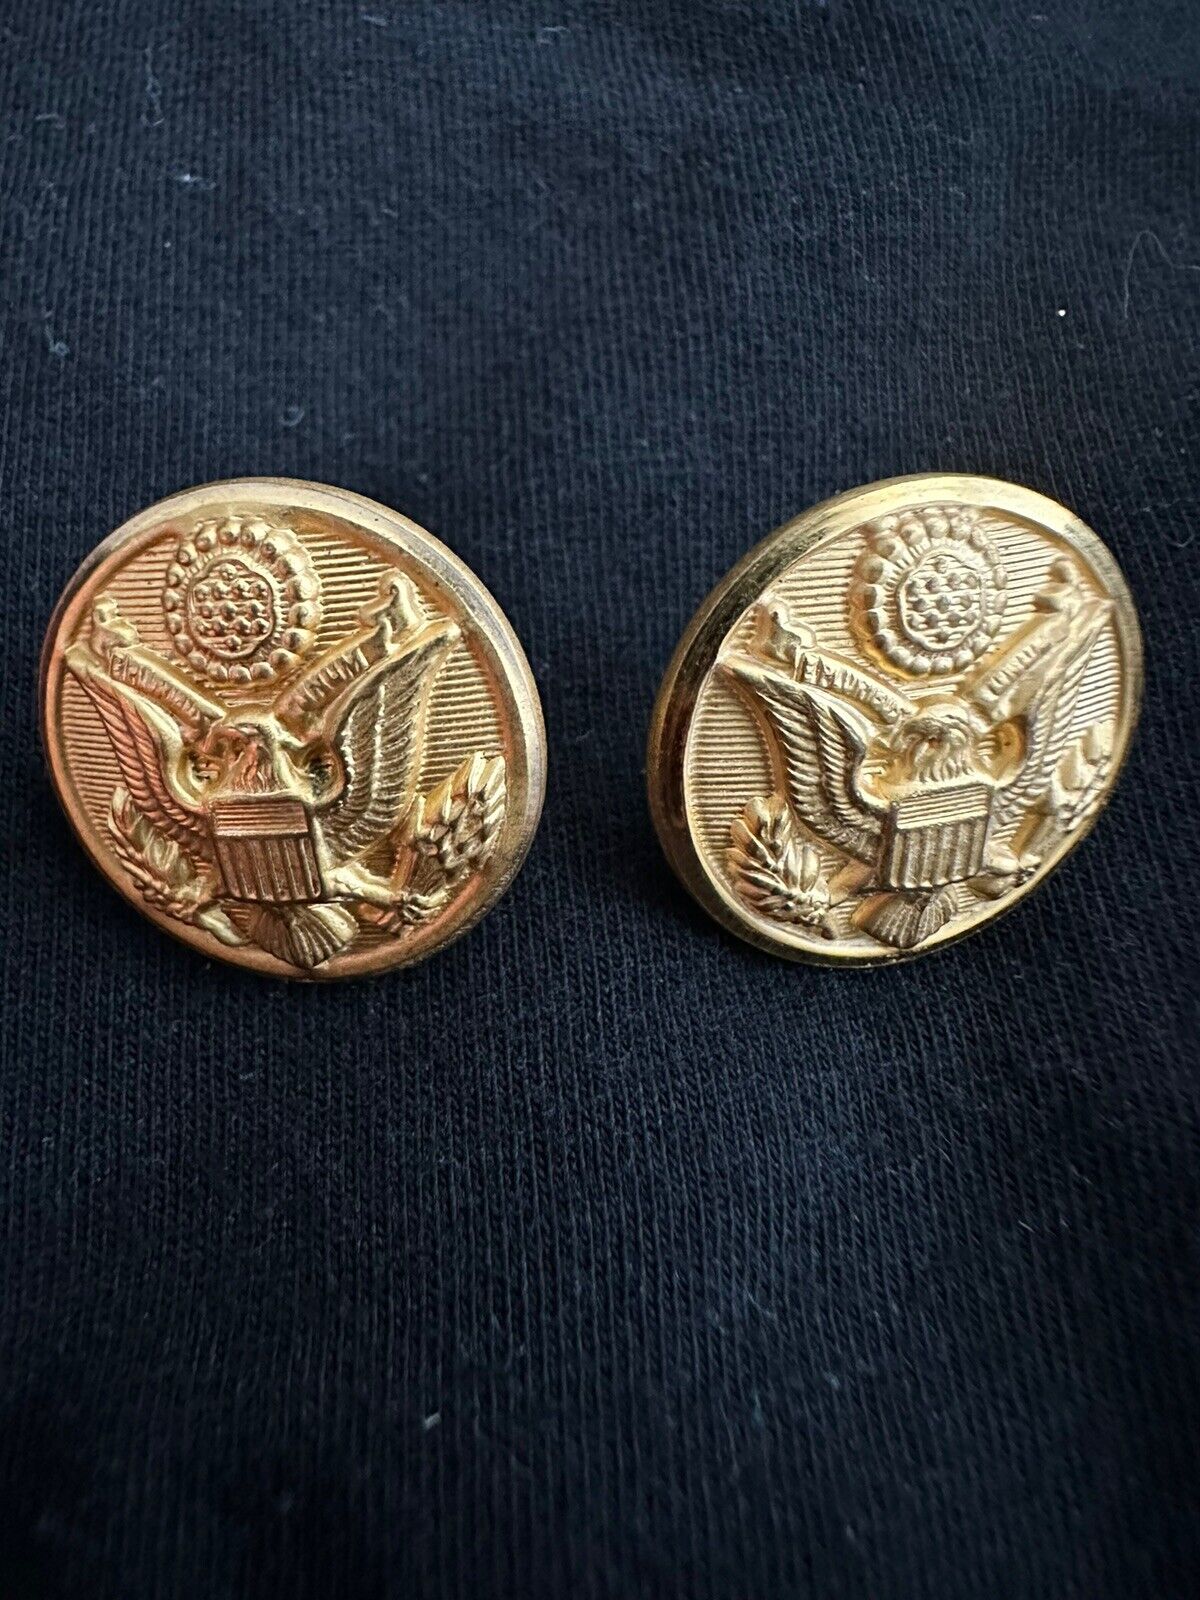 Vintage Military Brass US Navy Waterbury Button Company Uniform Buttons (2) Без бренда - фотография #11